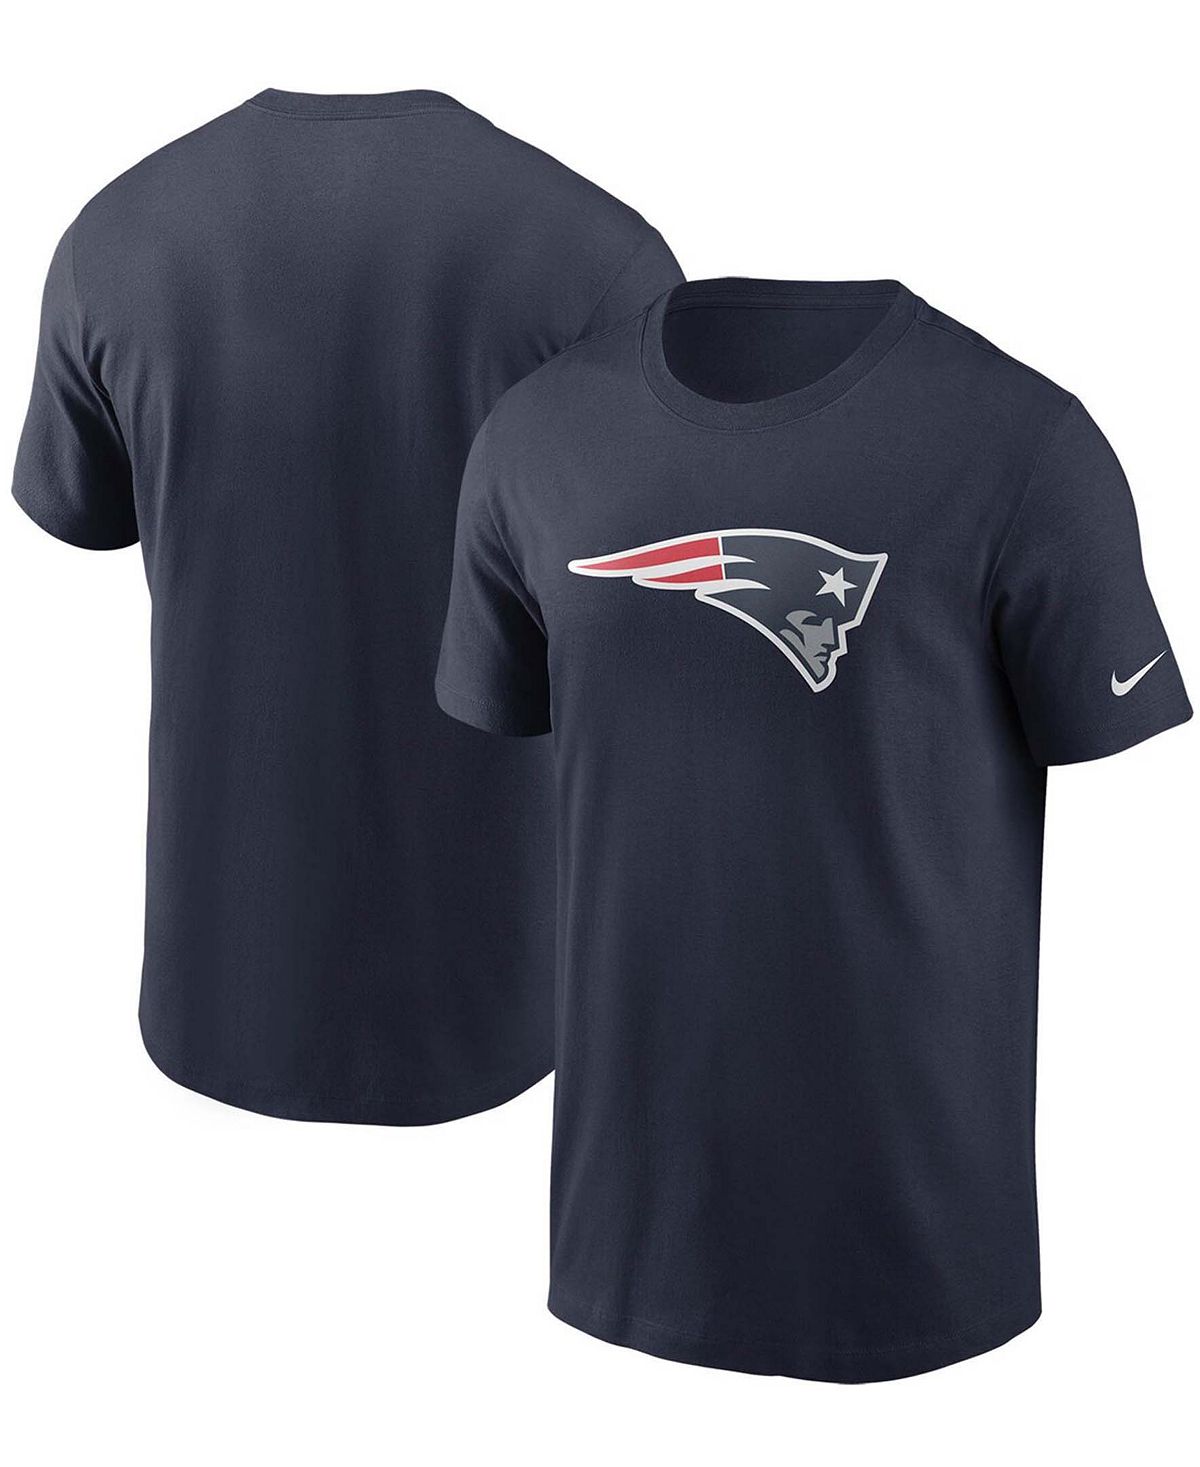 Мужская темно-синяя футболка с основным логотипом New England Patriots Nike ингленд джордж аллан эликсир ненависти